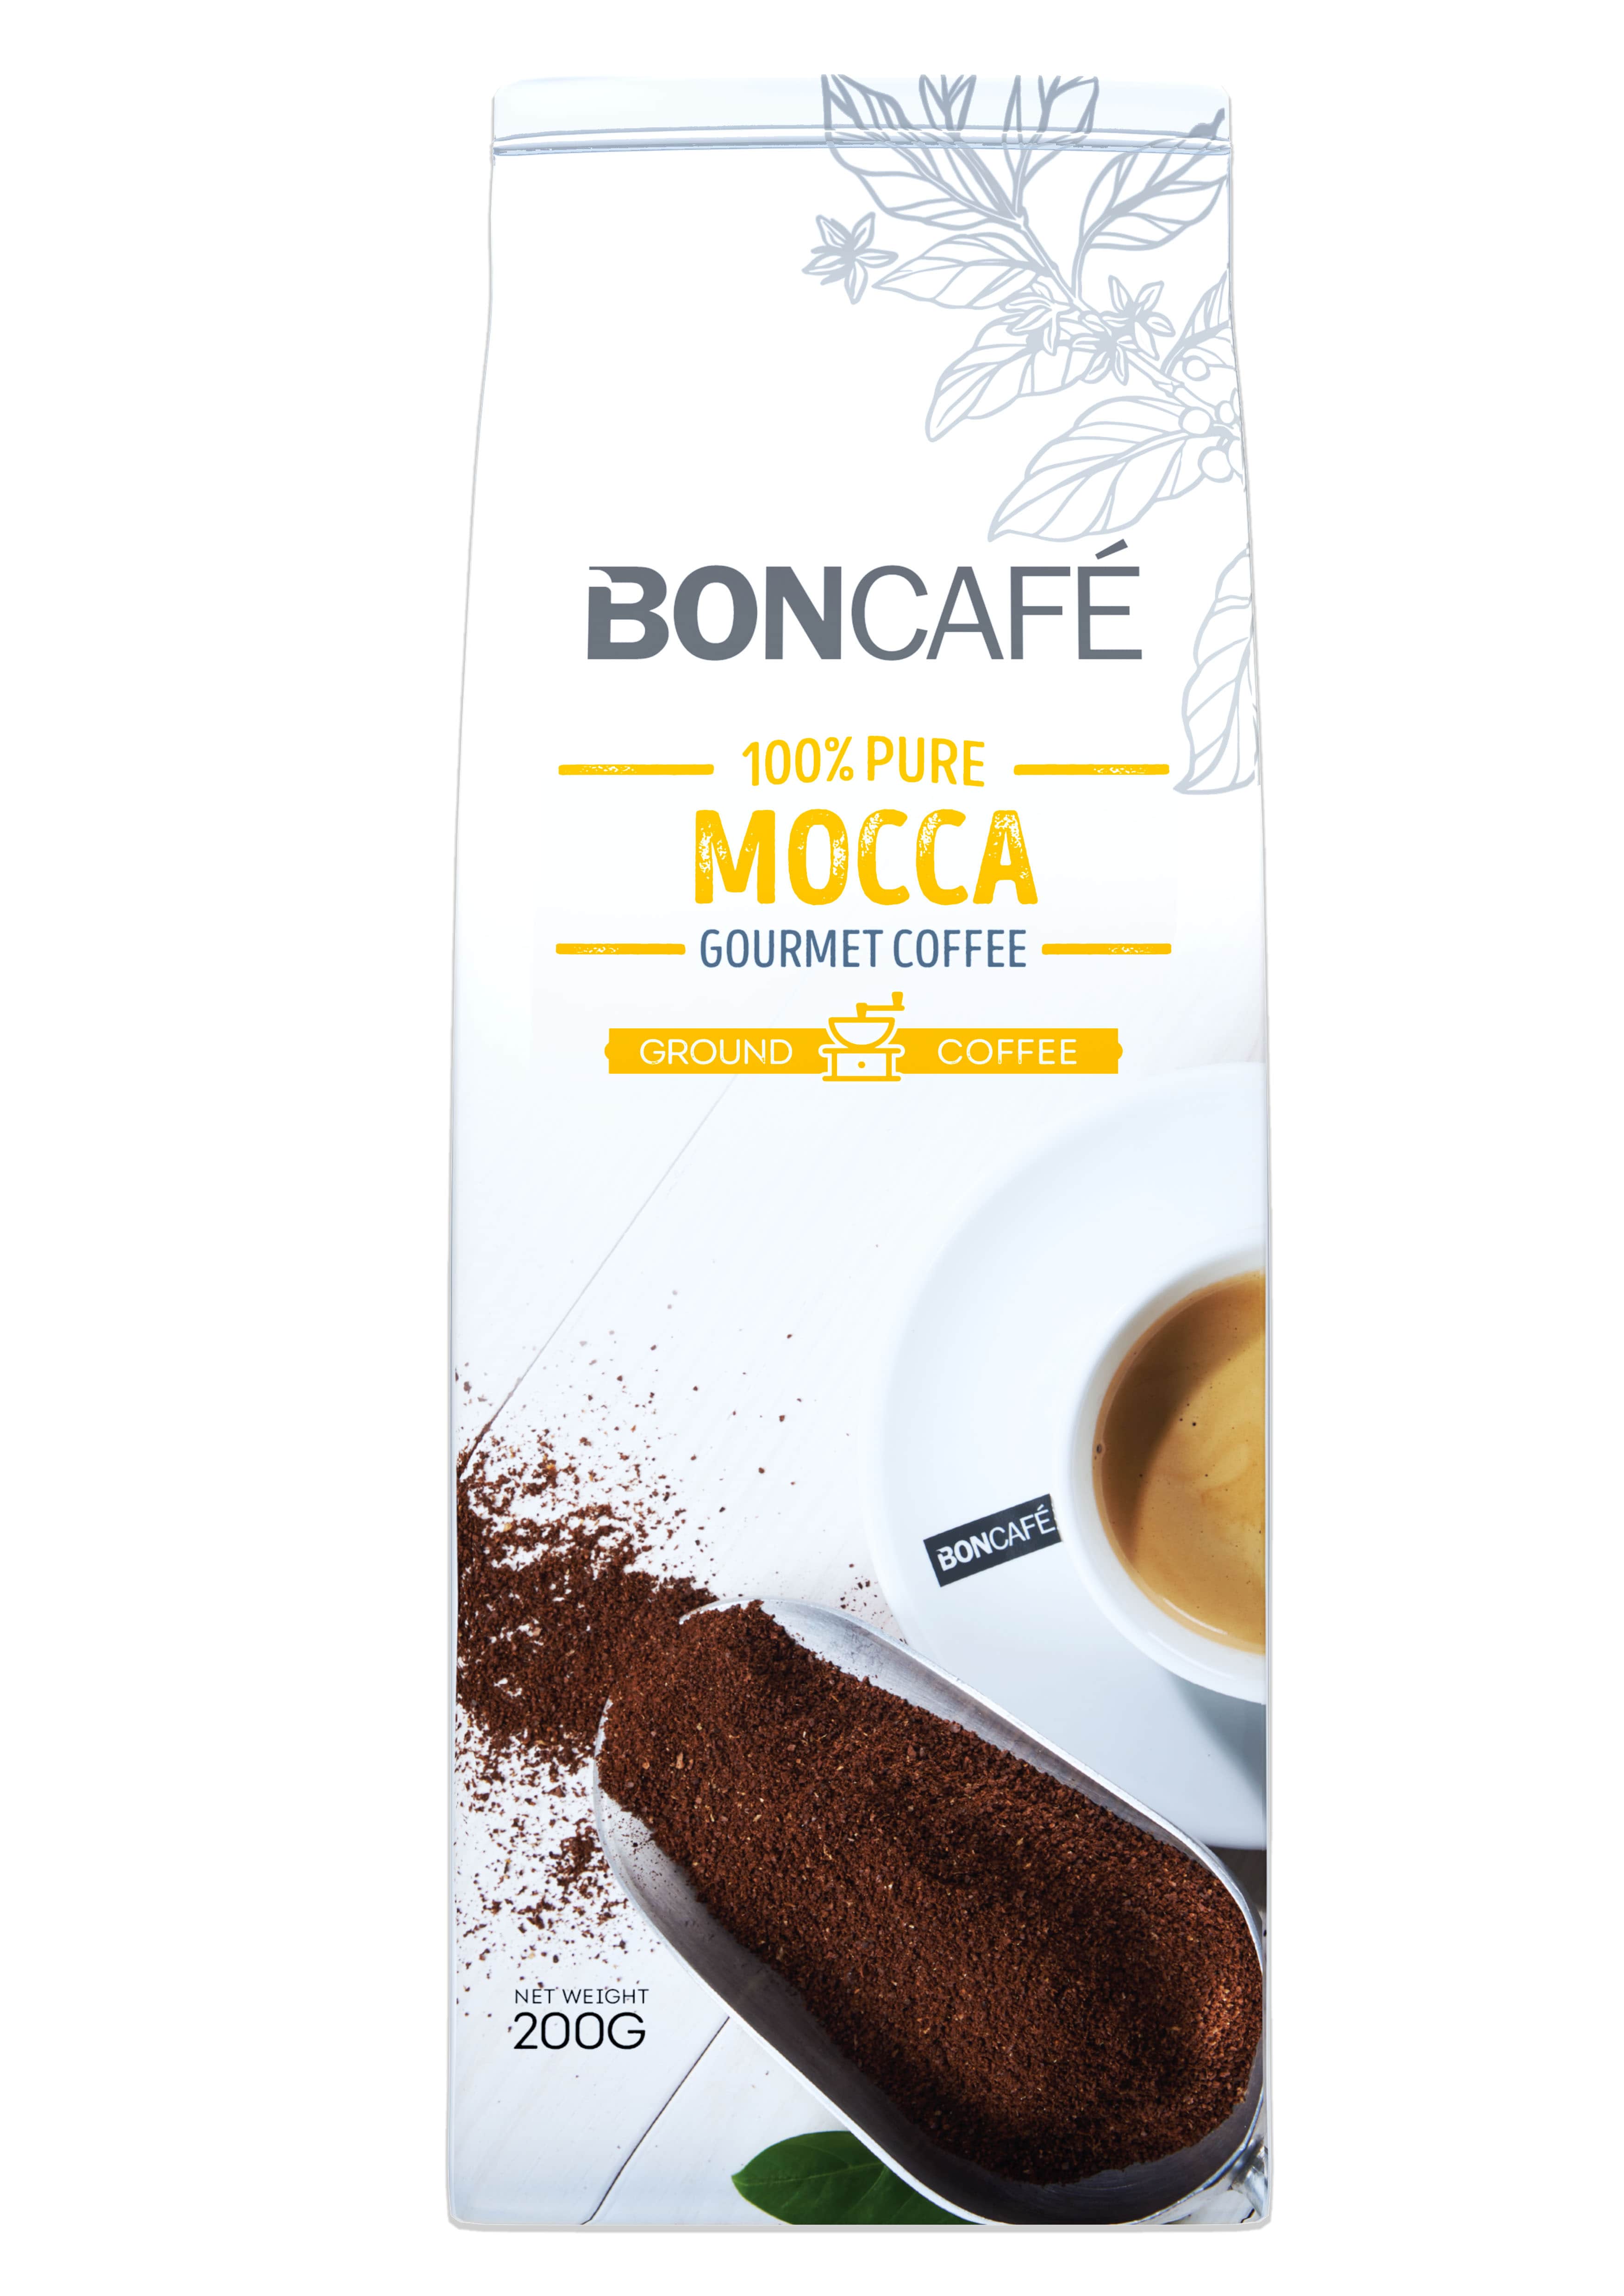 BONCAFÉ - GOURMET COLLECTION GROUND COFFEE: MOCCA BLEND